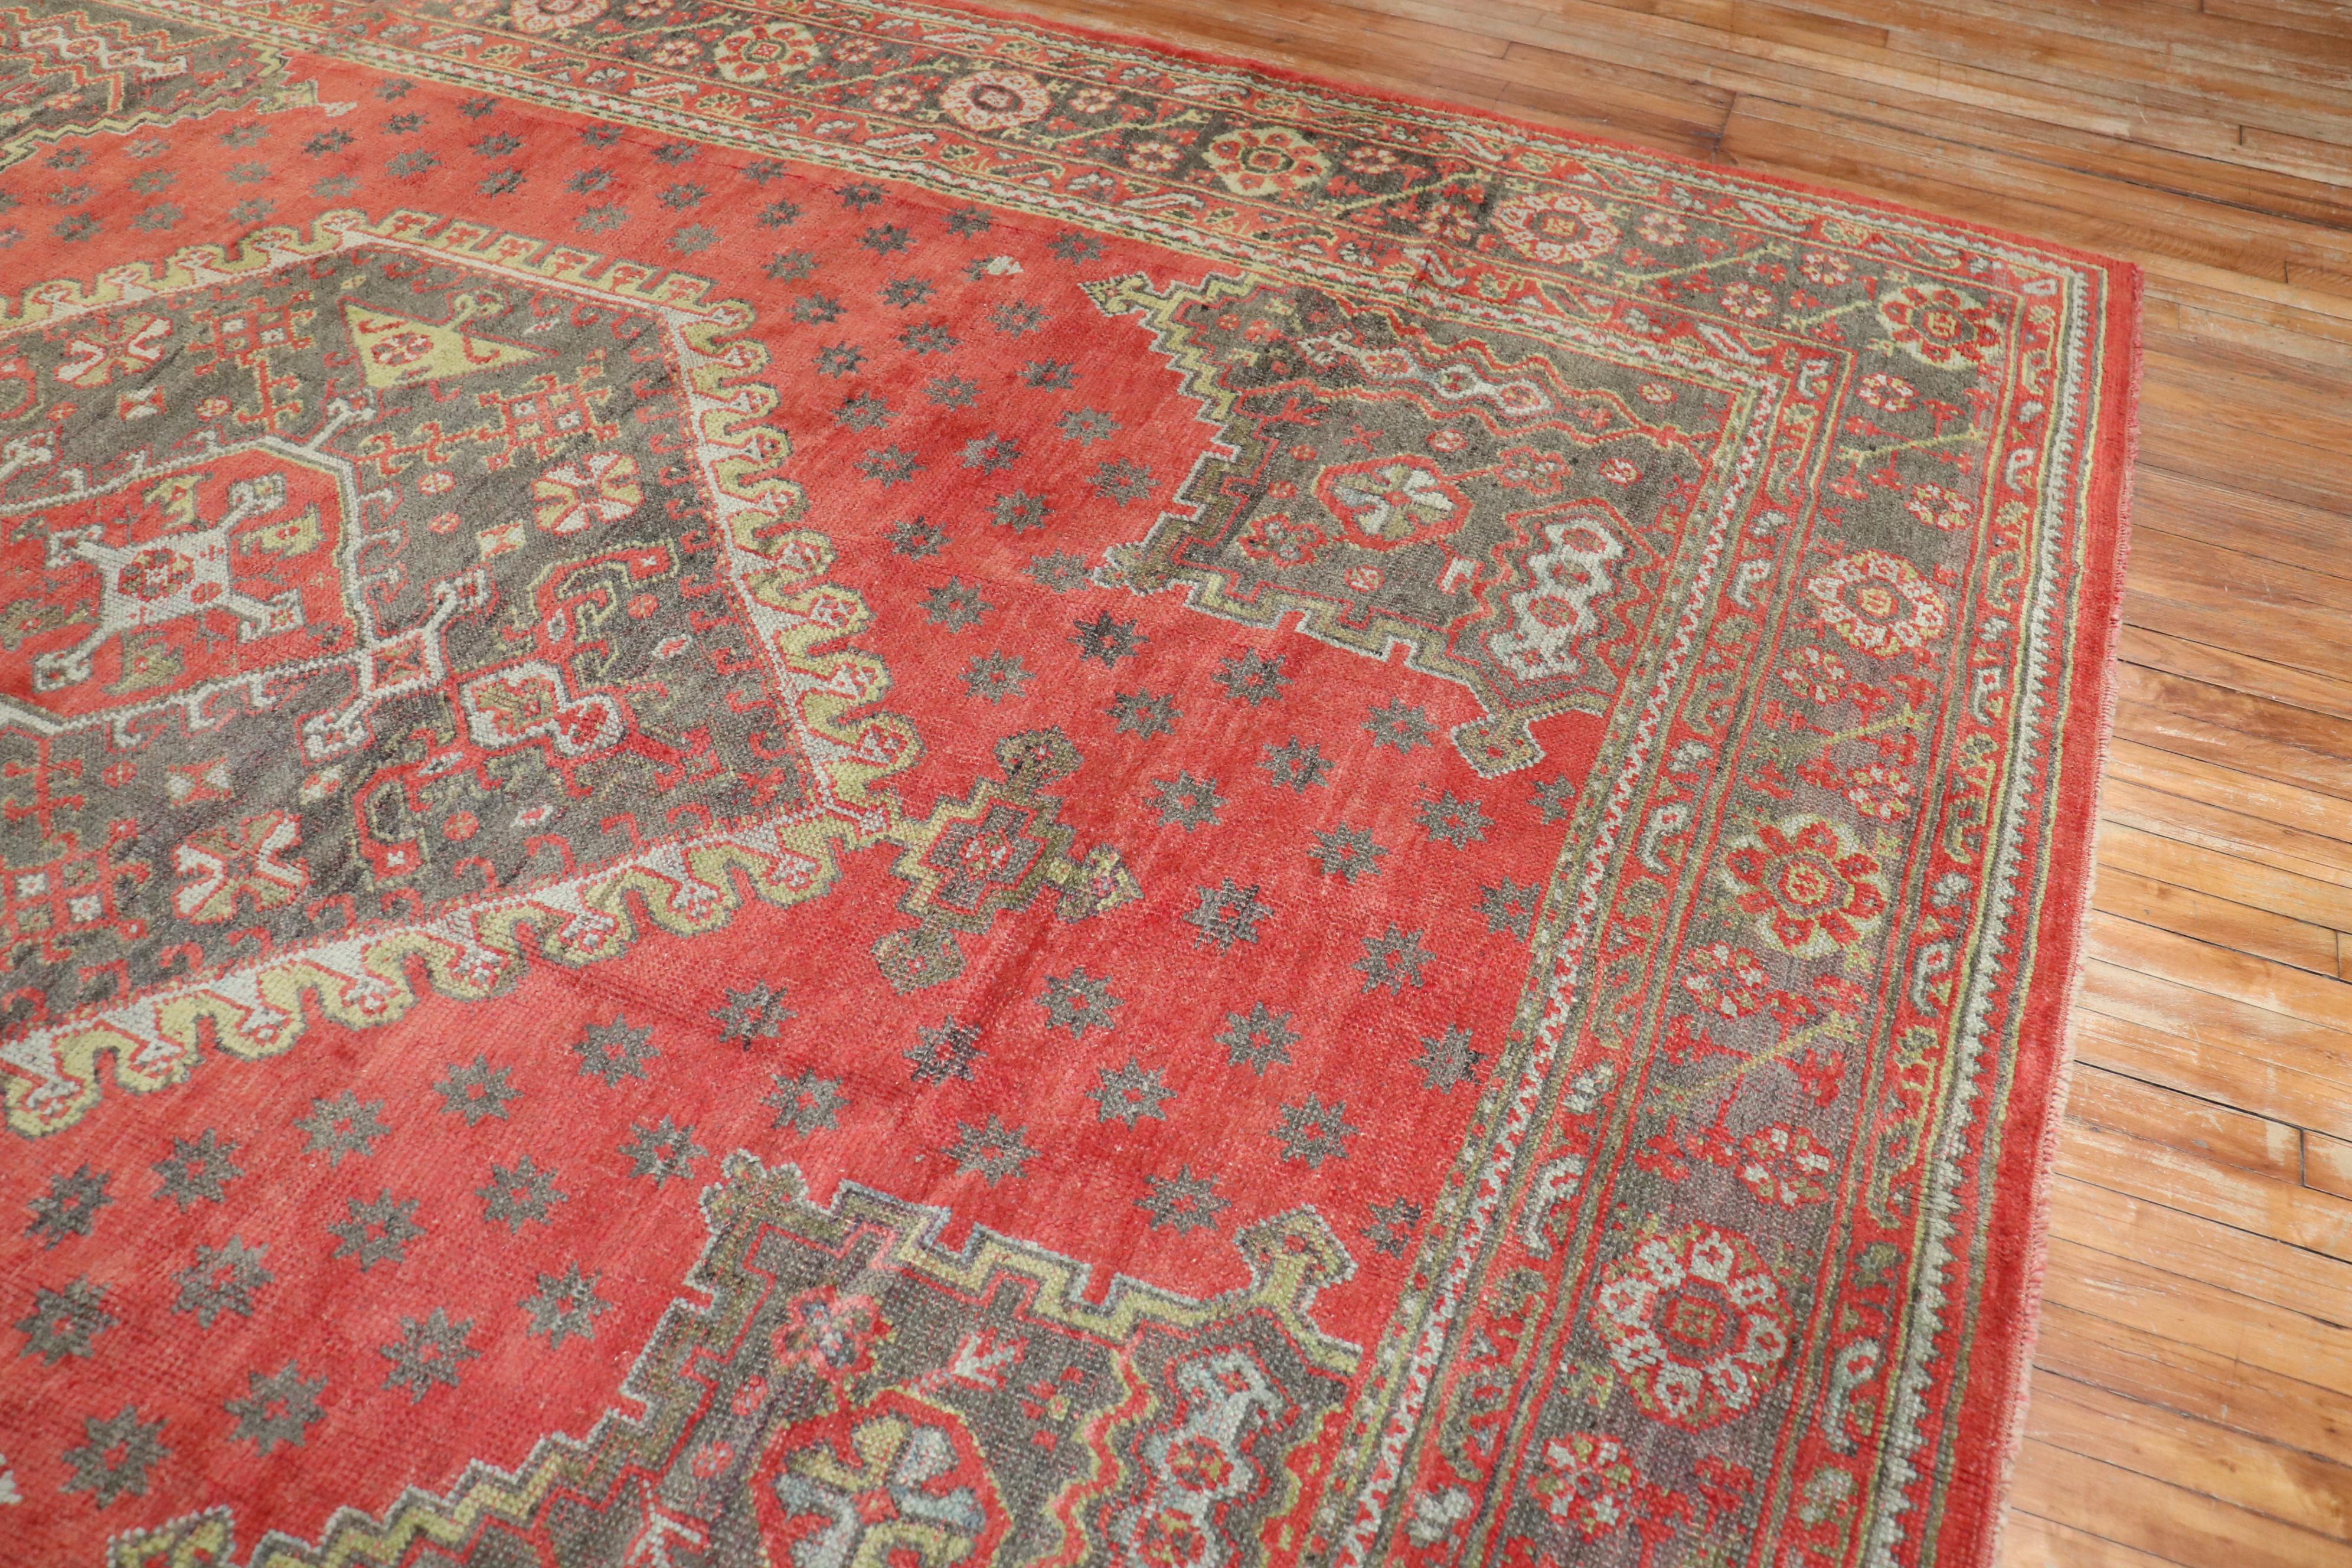 Traditional Antique Turkish Oushak Carpet, 20th Century For Sale 4